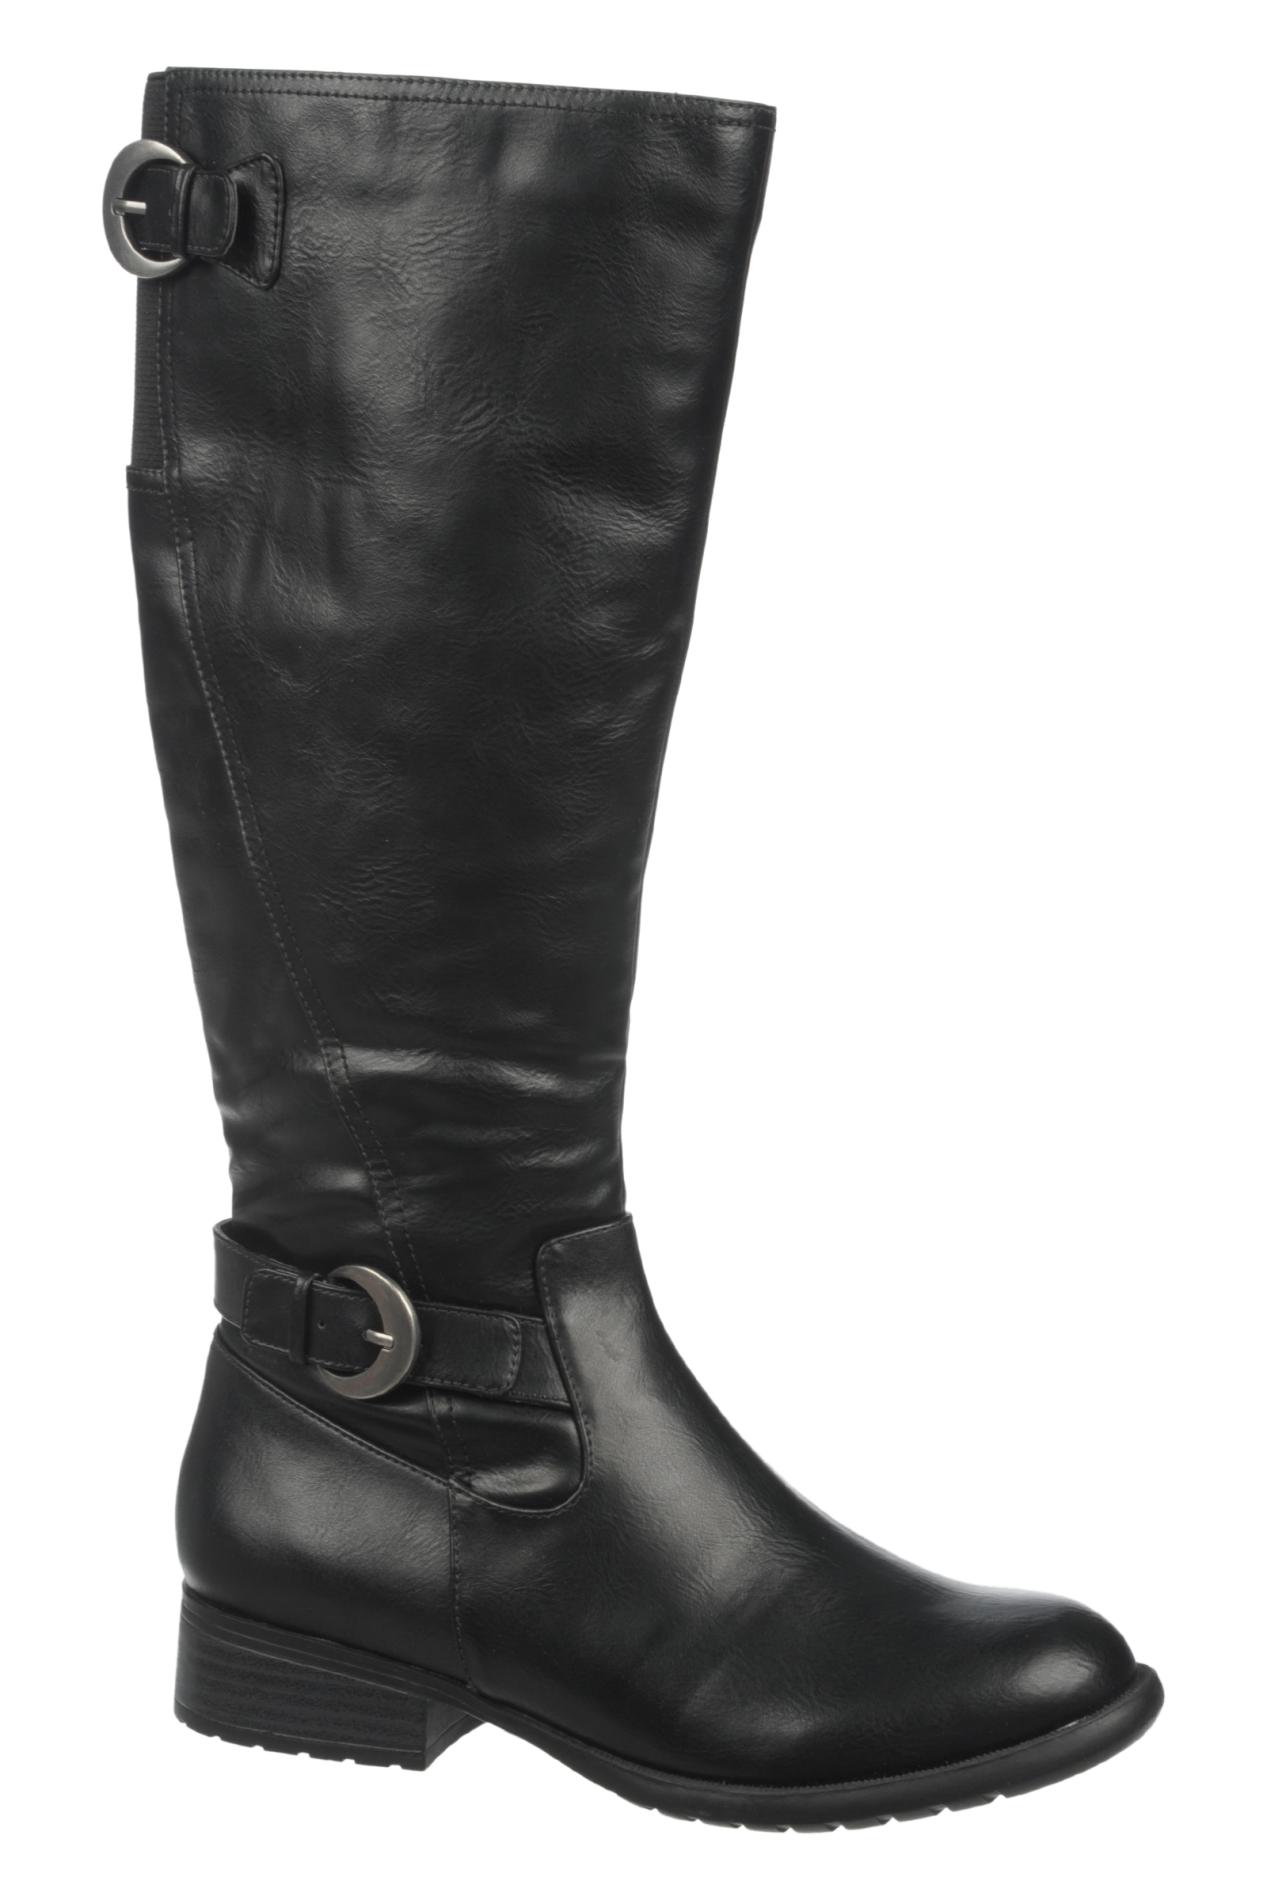 Olivia Miller Women's Xylans Black Knee-High  Extended Calf Riding Boot